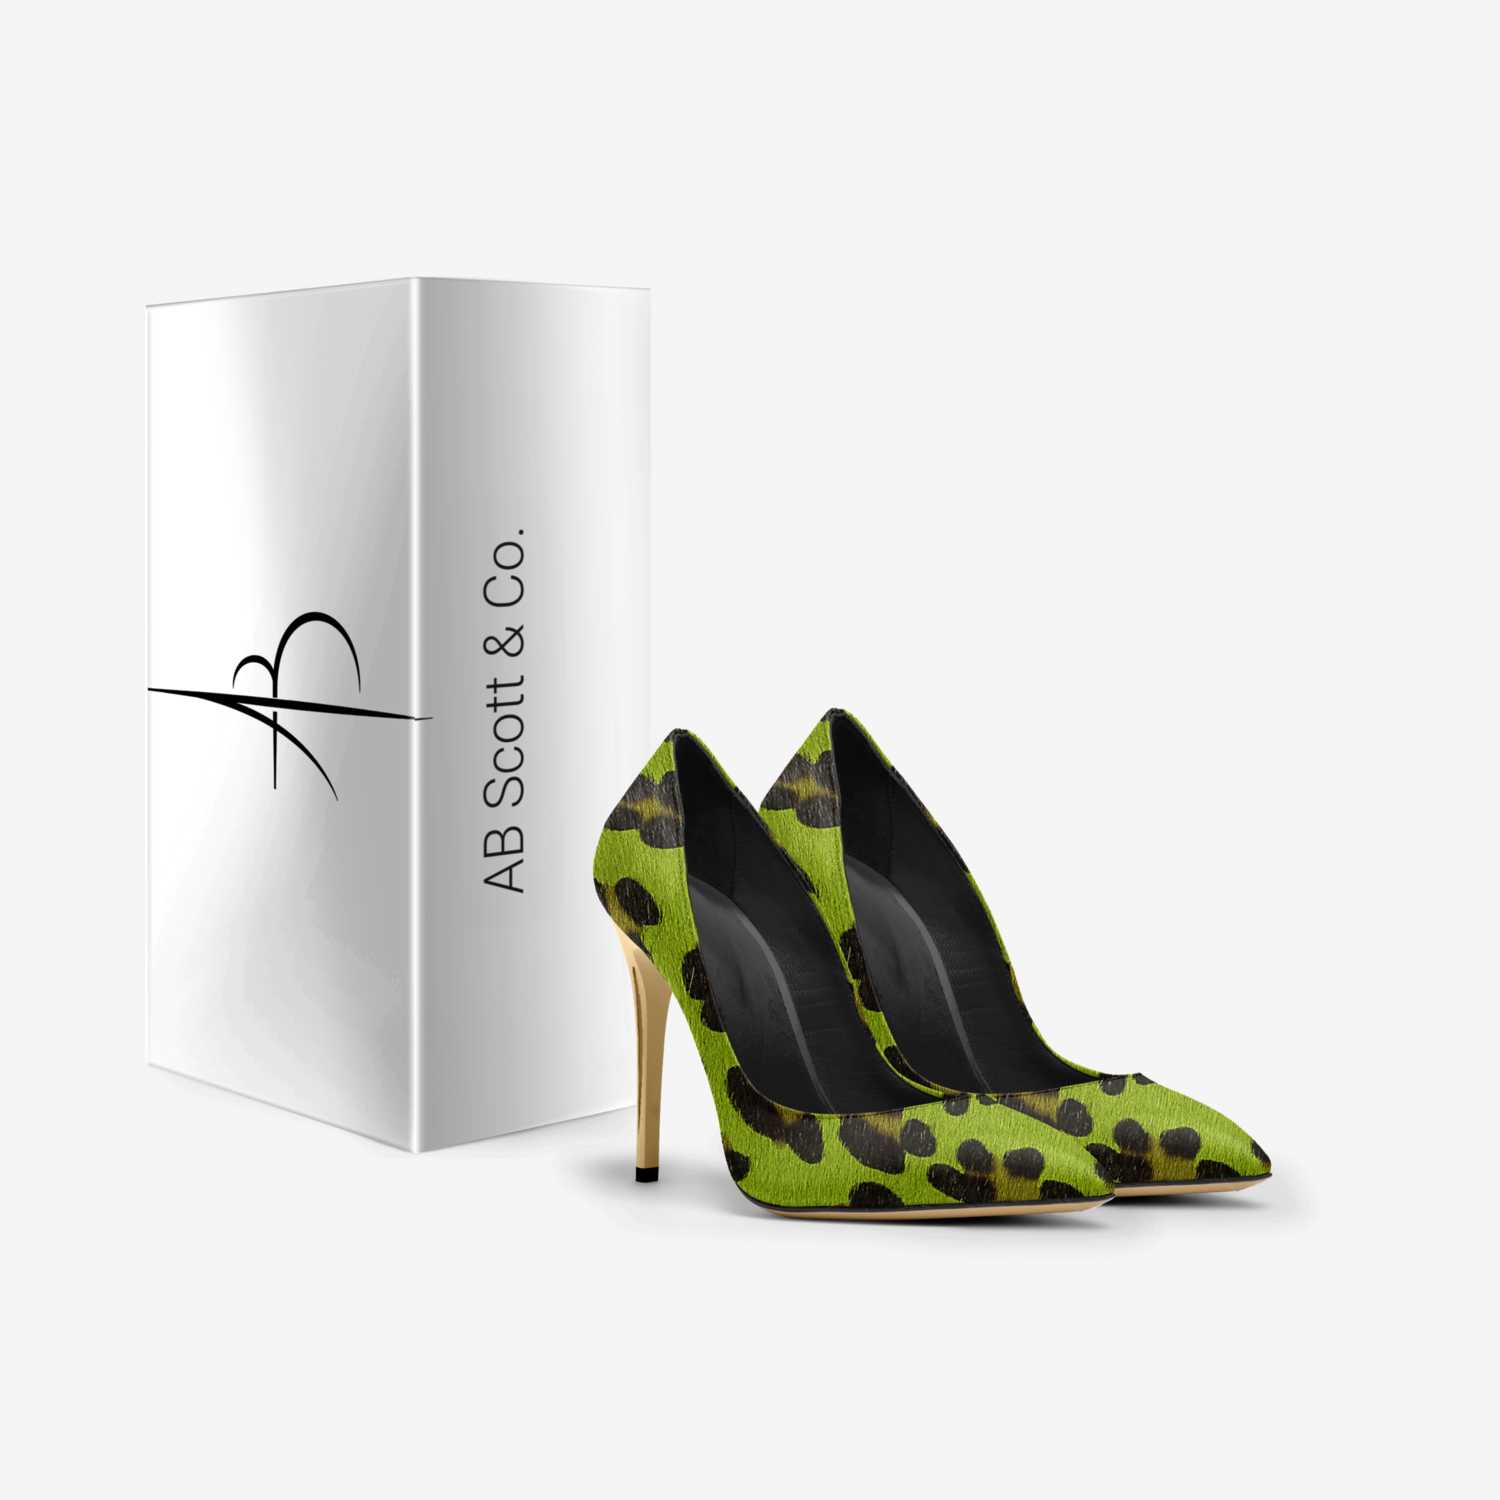 AB Scott Co. custom made in Italy shoes by Bridget Scott | Box view